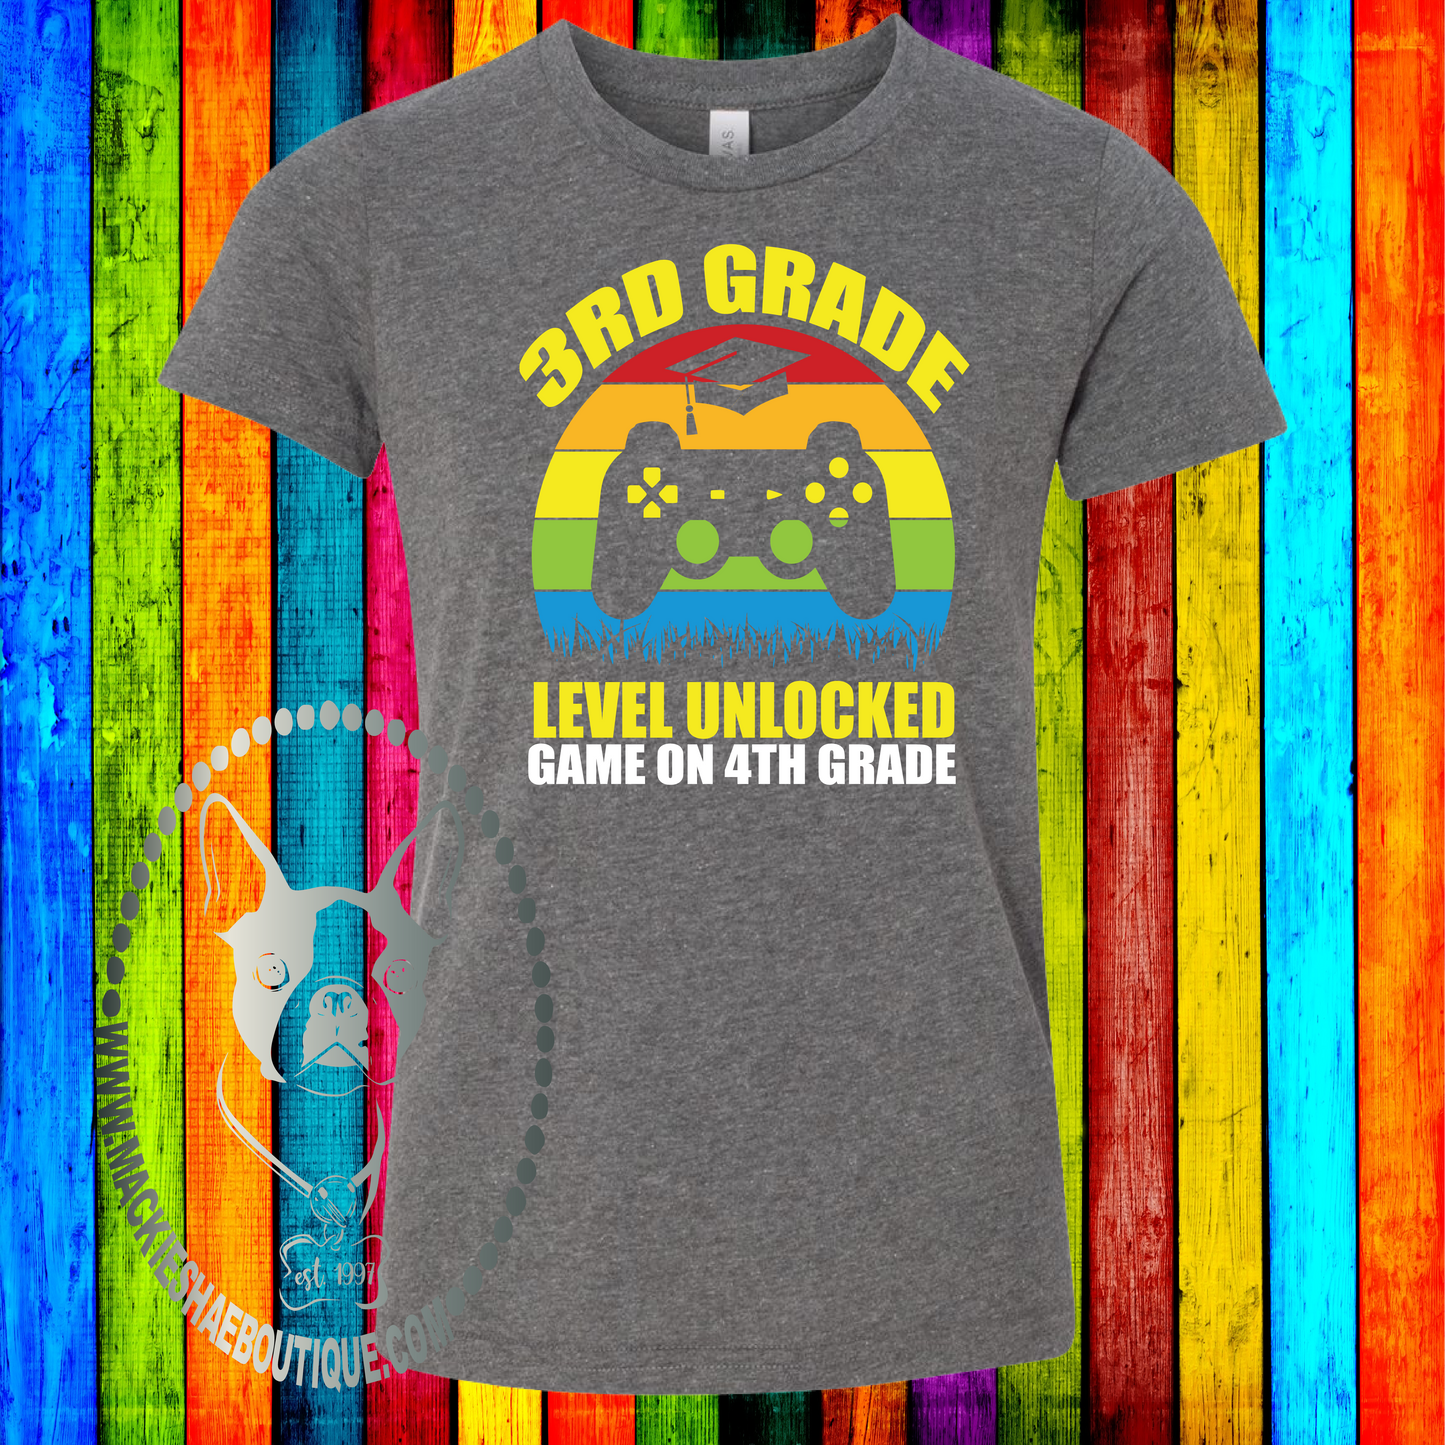 Level Unlocked (Get any grade) Custom Shirt for Kids, Soft Short Sleeve